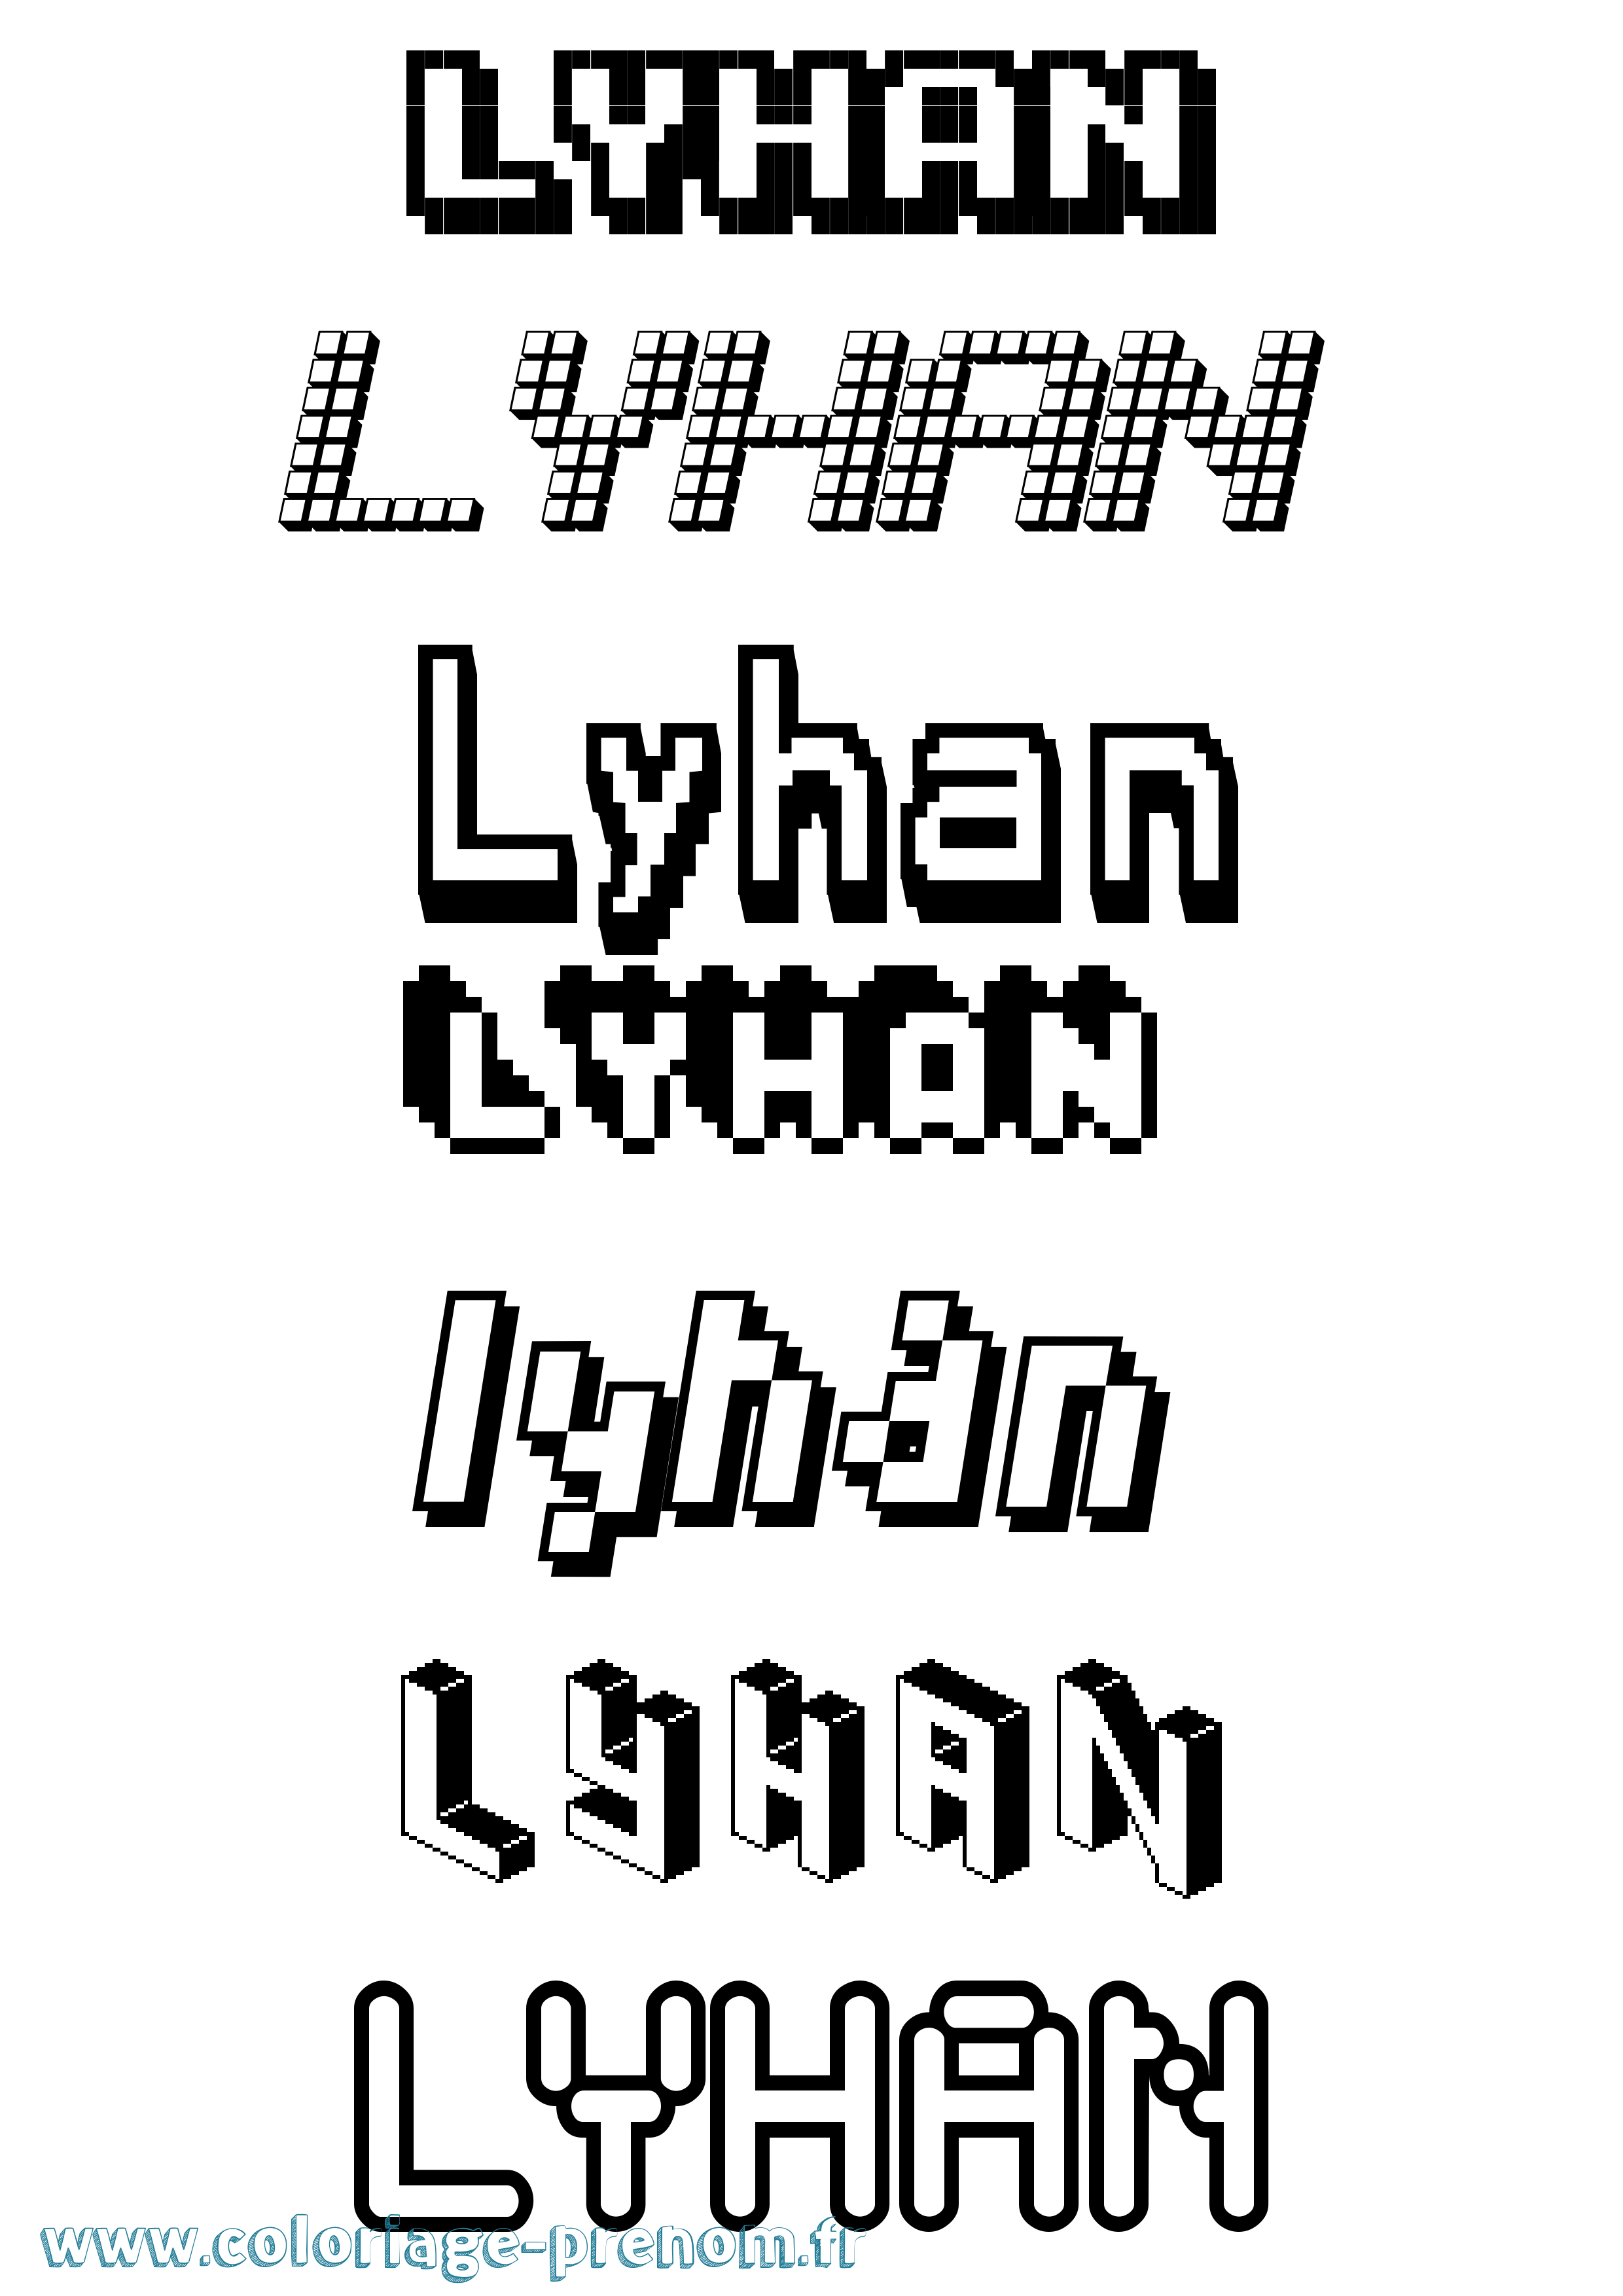 Coloriage prénom Lyhan Pixel